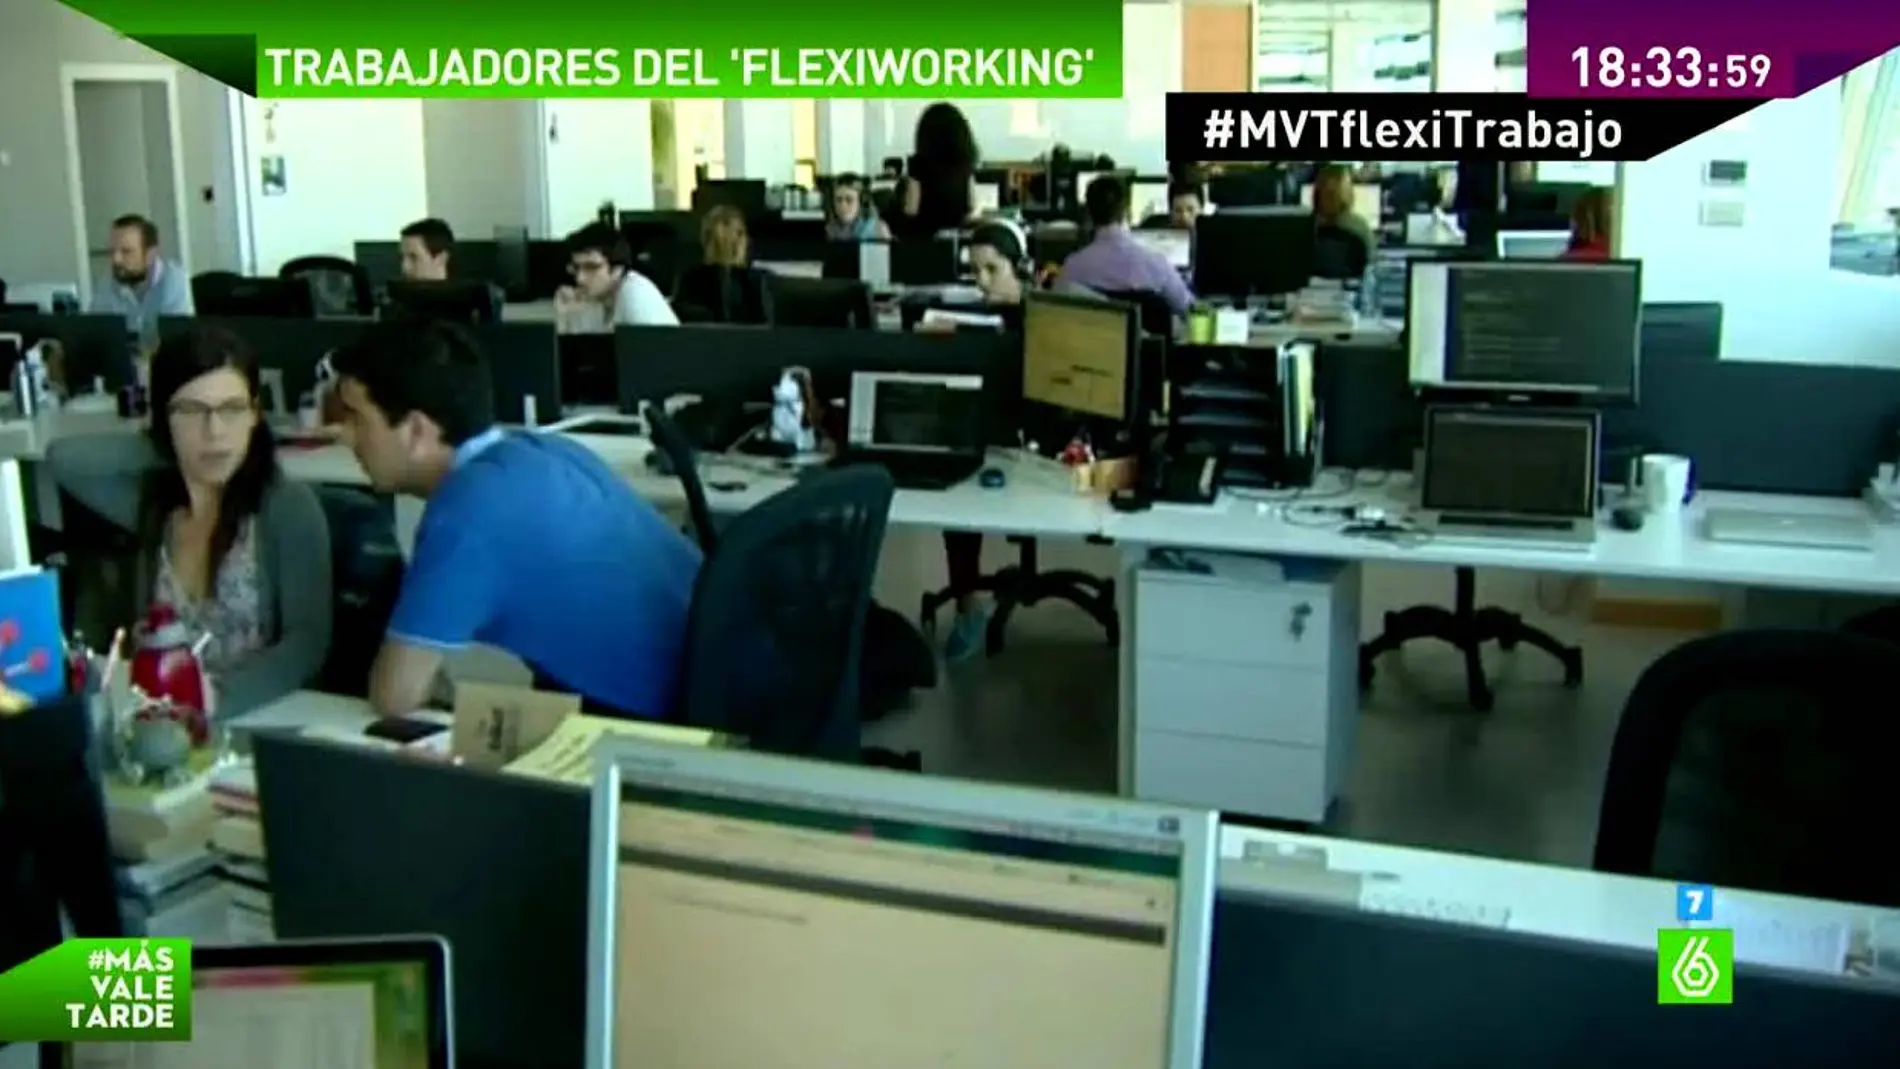 Trabajadores flexiworking